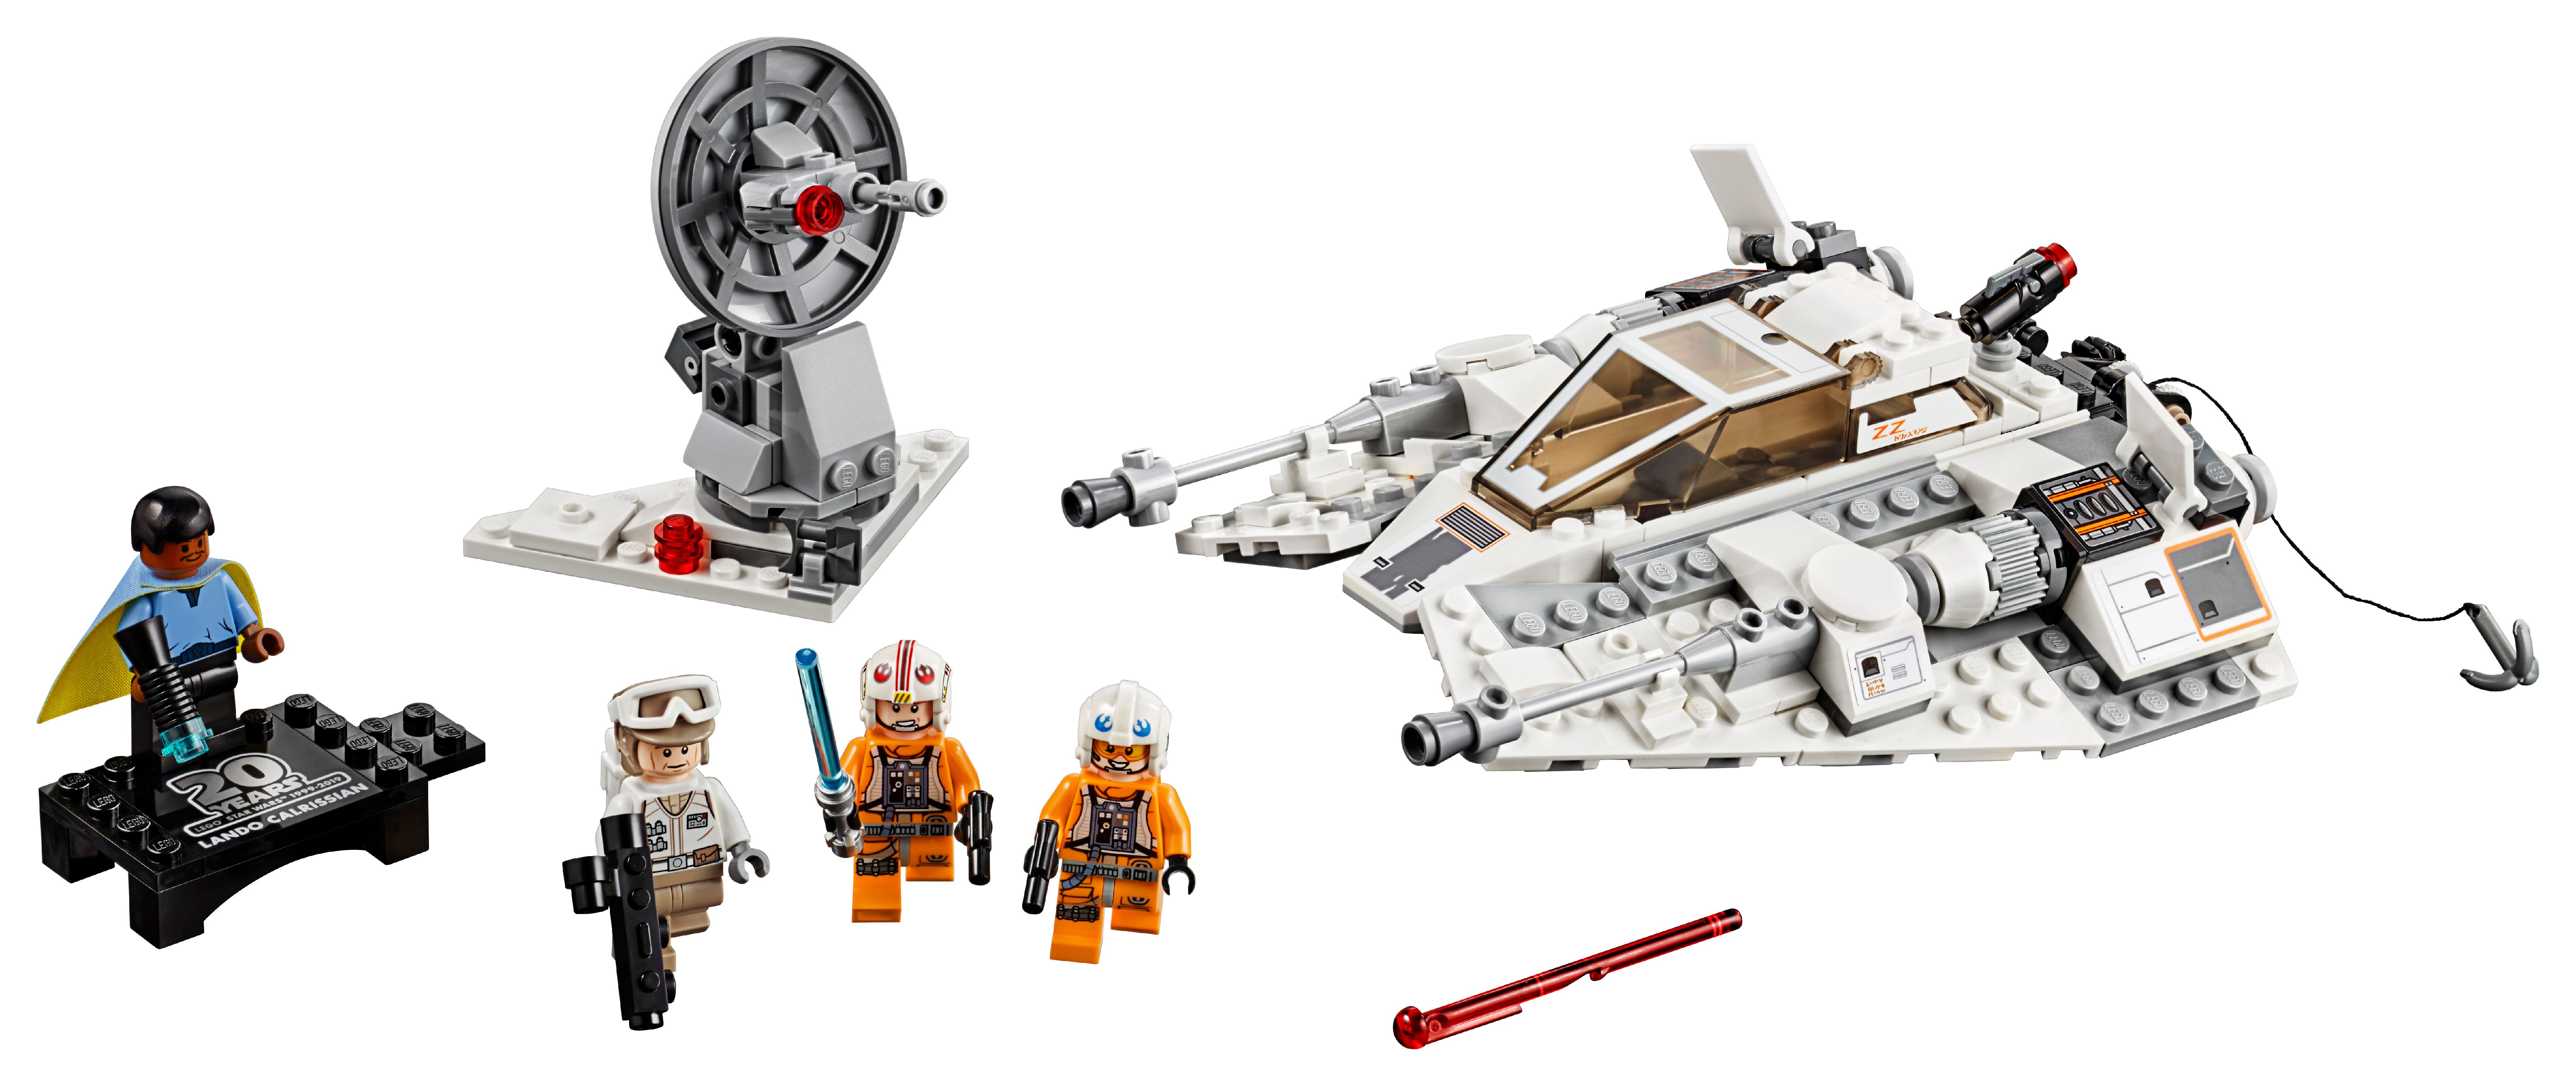 LEGO Star Wars 20th Anniversary Edition Snowspeeder Vehicle Model 75259 - image 3 of 8